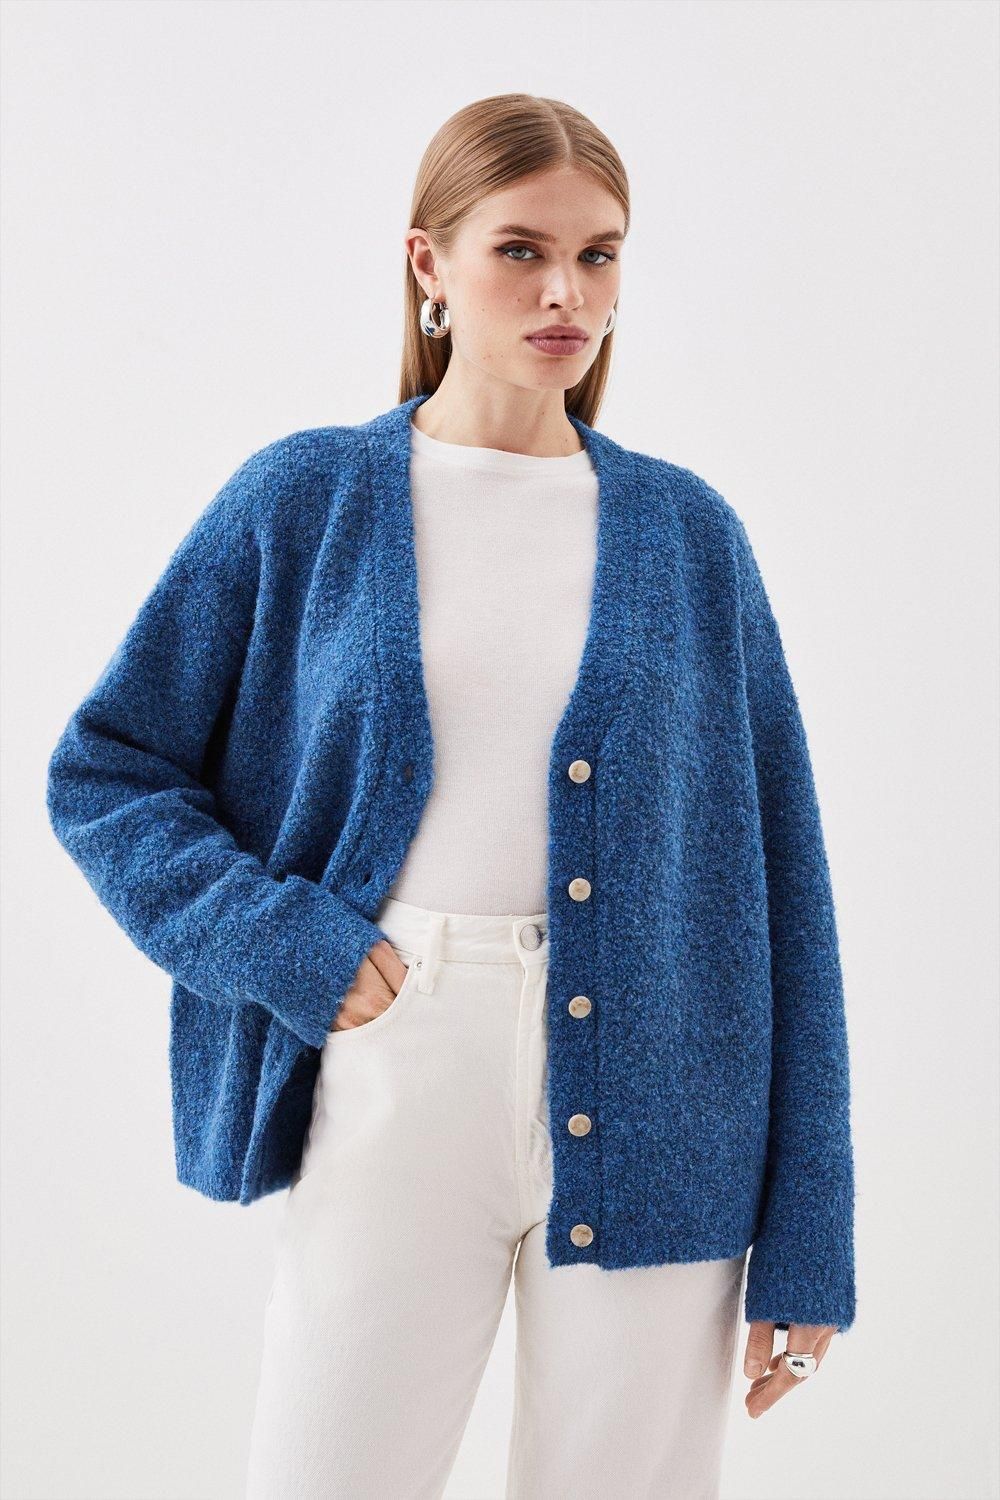 Wool Blend Boucle Knit Slouchy Cardigan | Karen Millen US